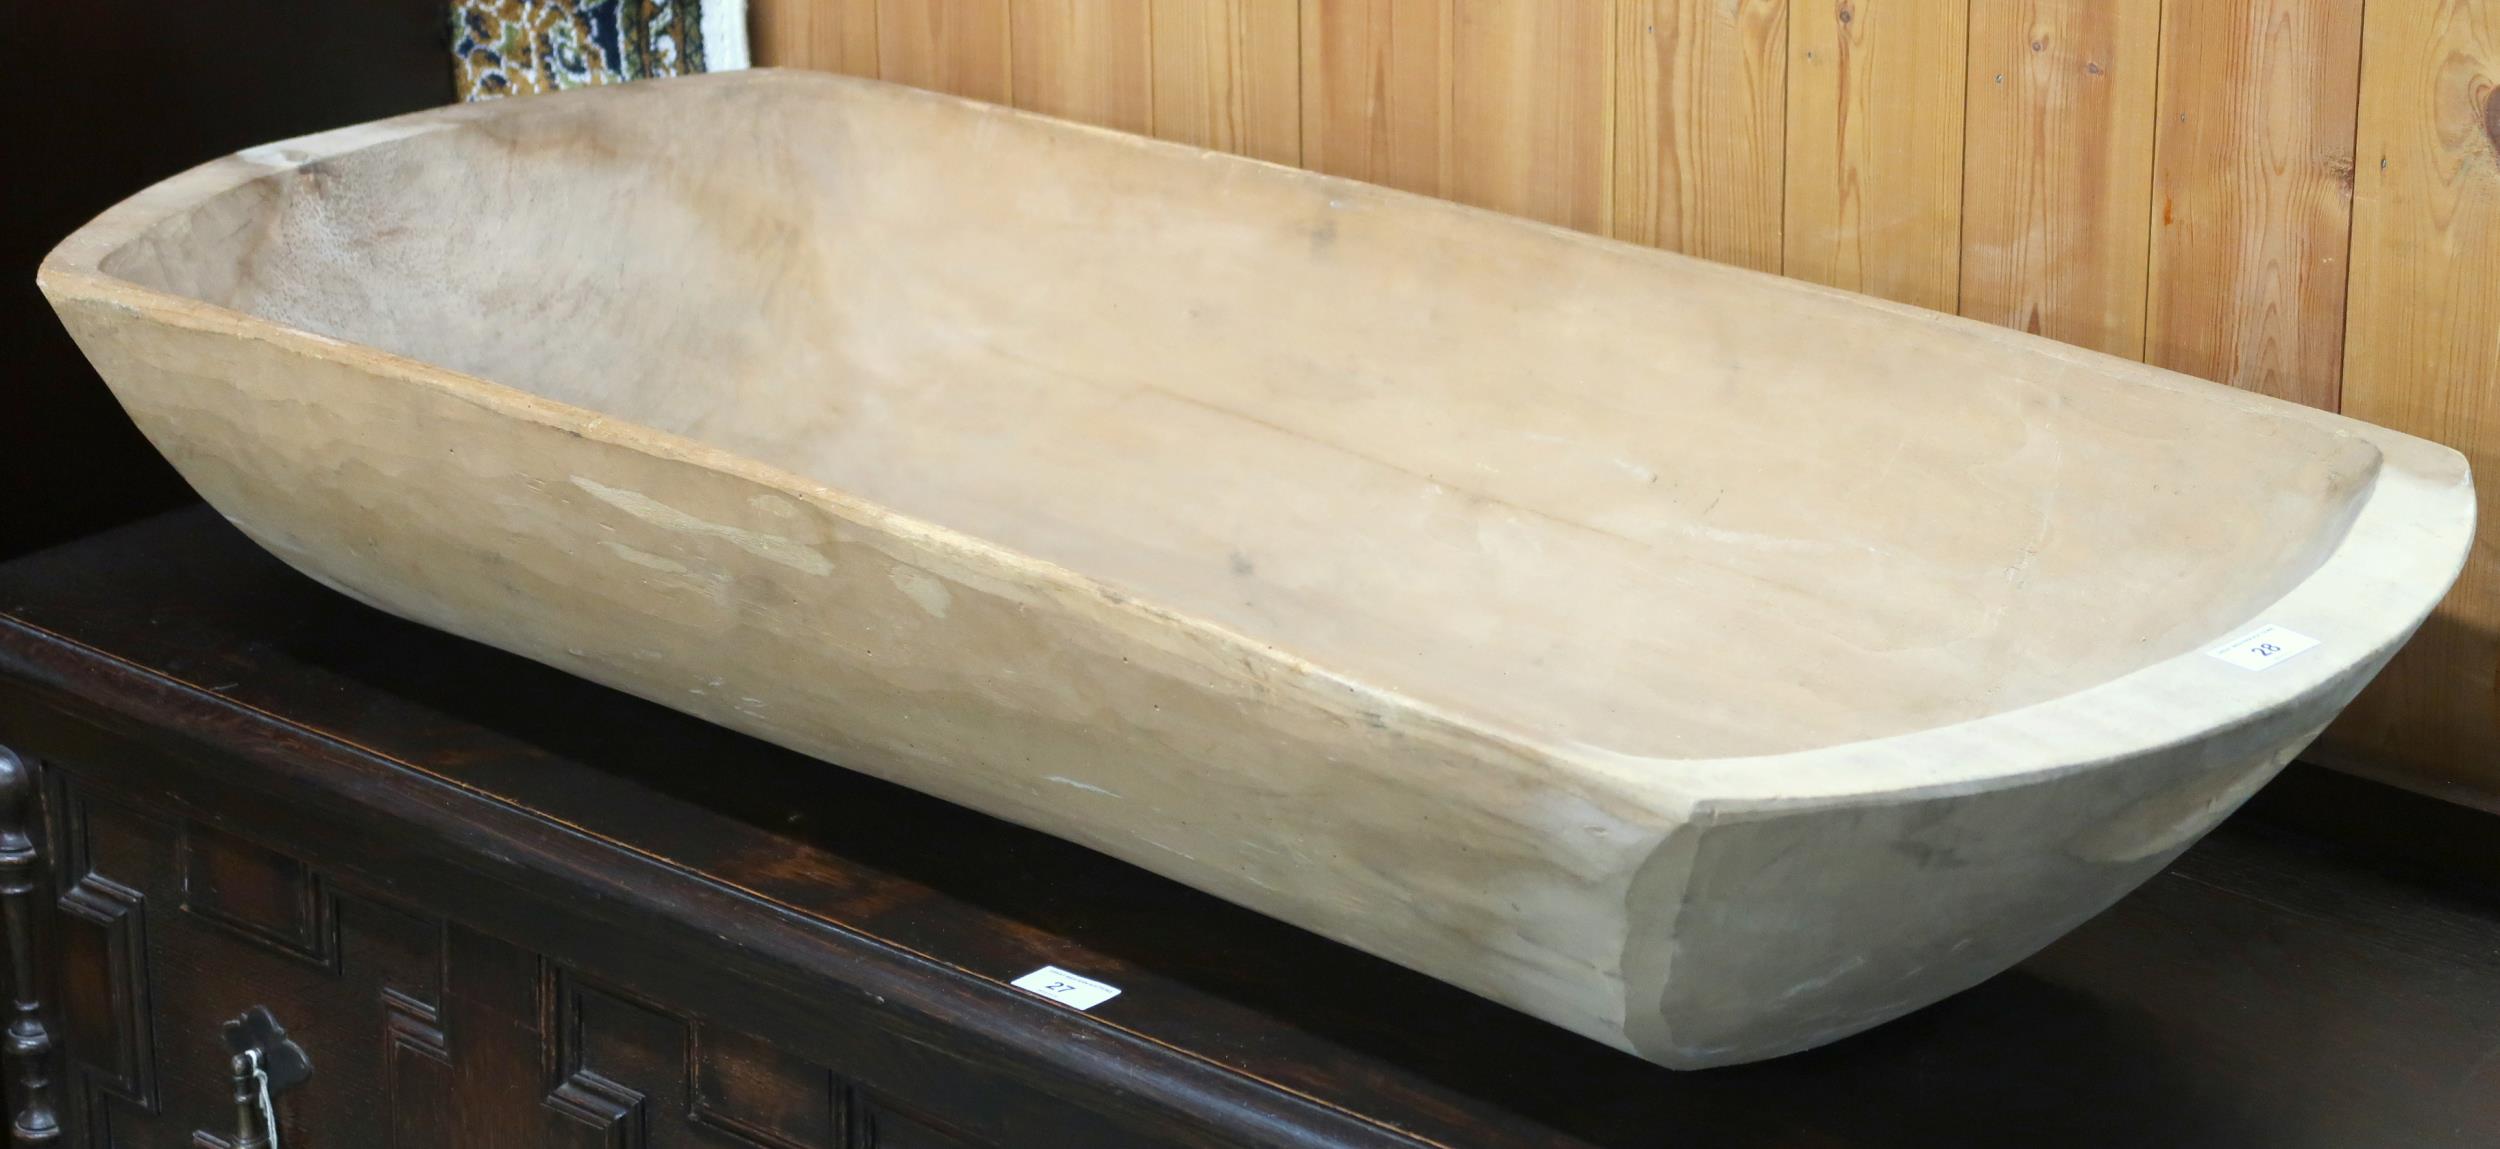 A 19th century shaped pine dough bin, 18cm high x 109cm wide x 45cm deep Condition Report: